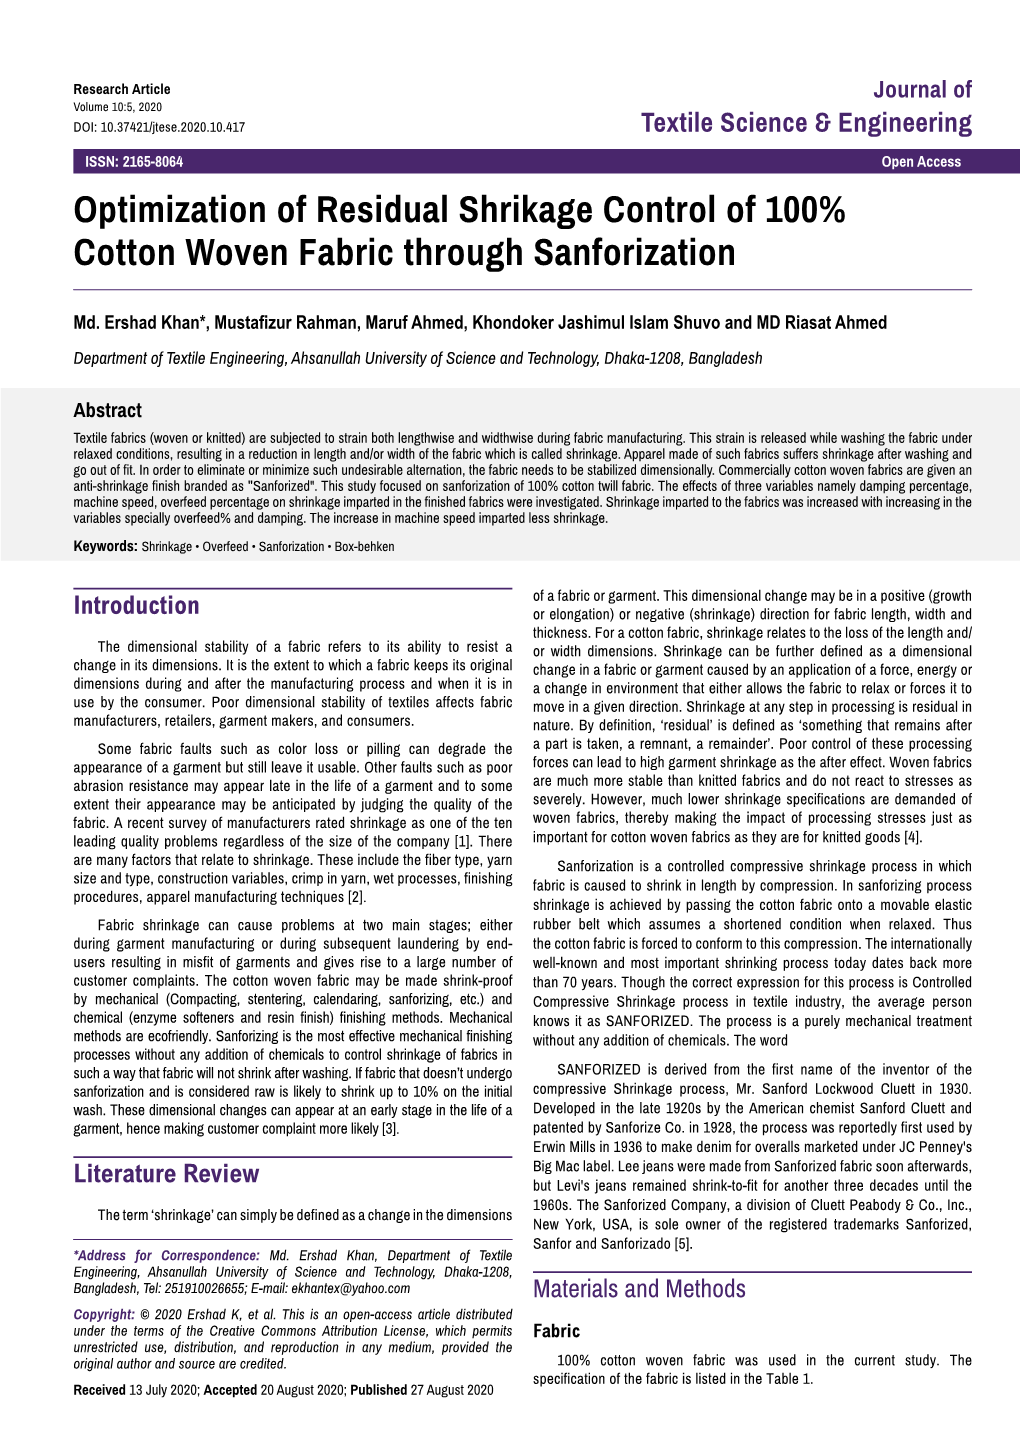 Optimization of Residual Shrikage Control of 100% Cotton Woven Fabric Through Sanforization